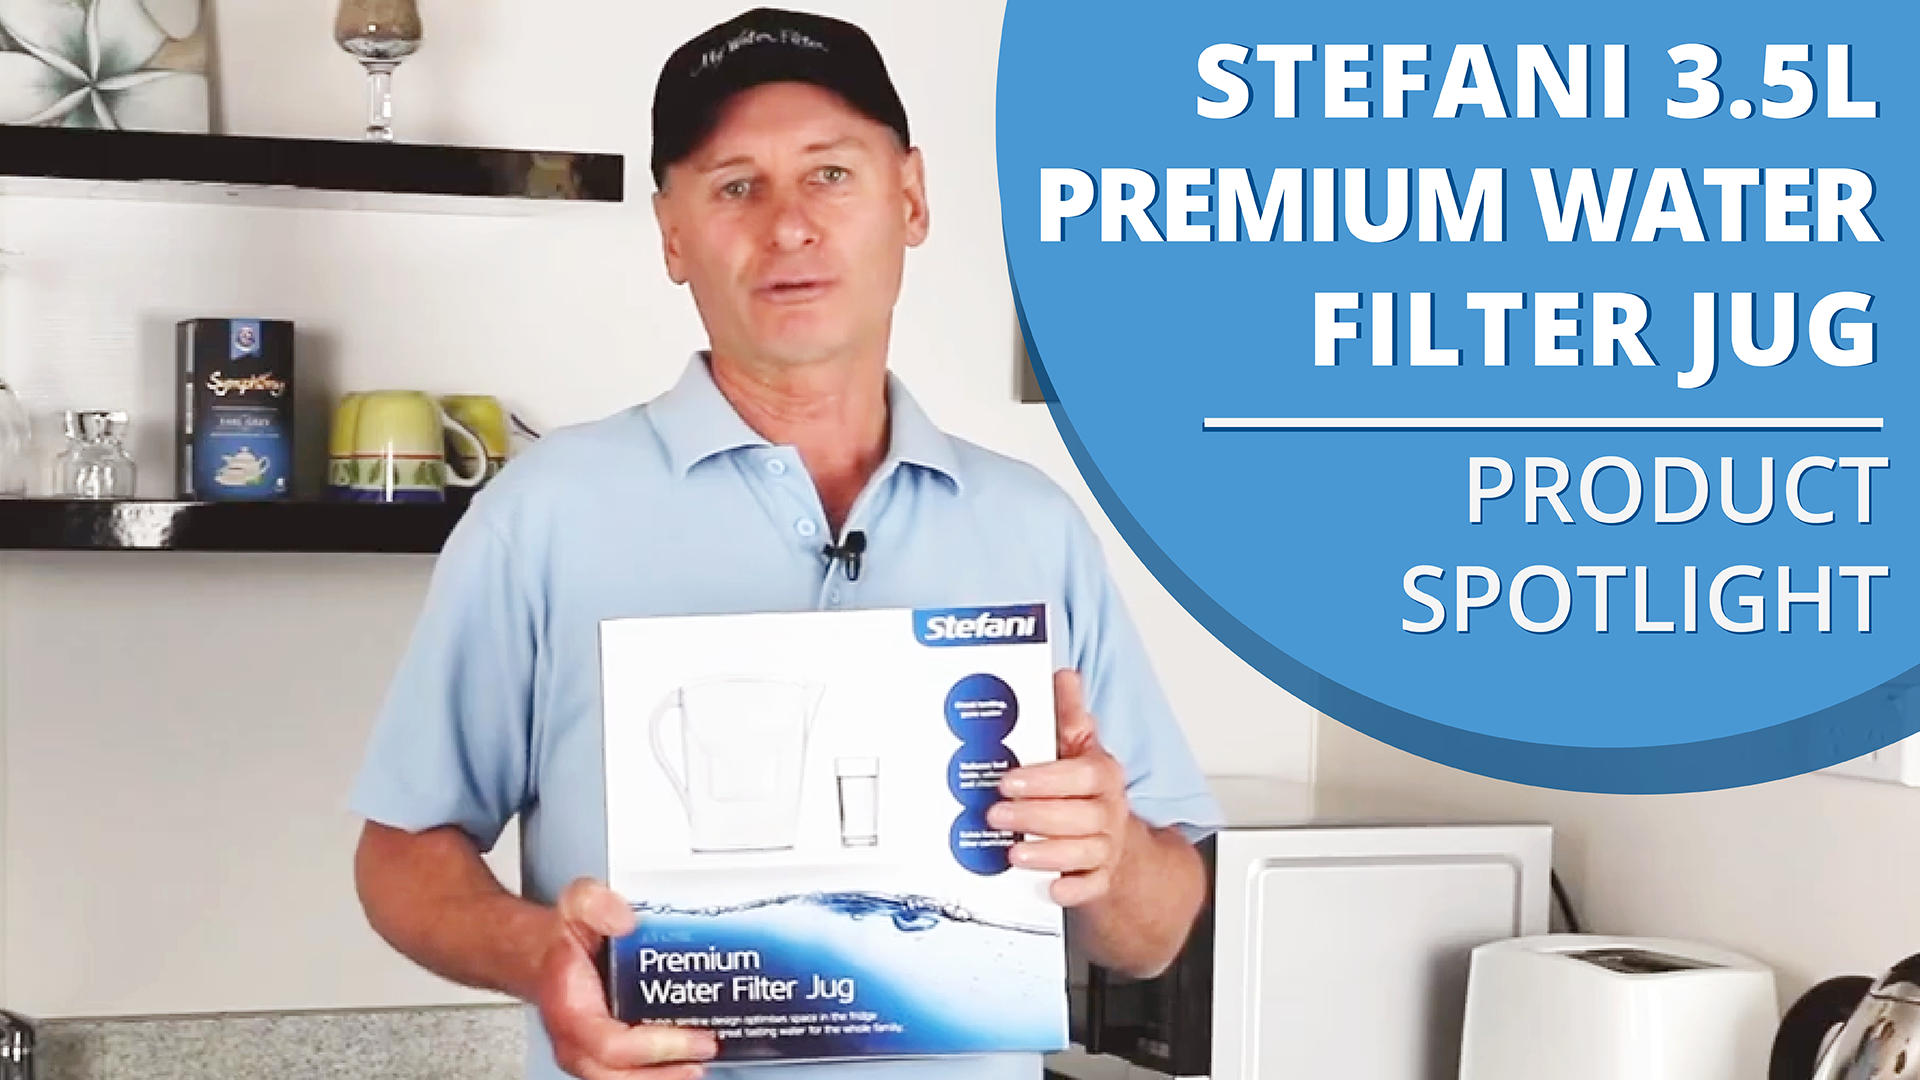 [VIDEO] Stefani 3.5L Premium Water Filter Jug - Product Spotlight